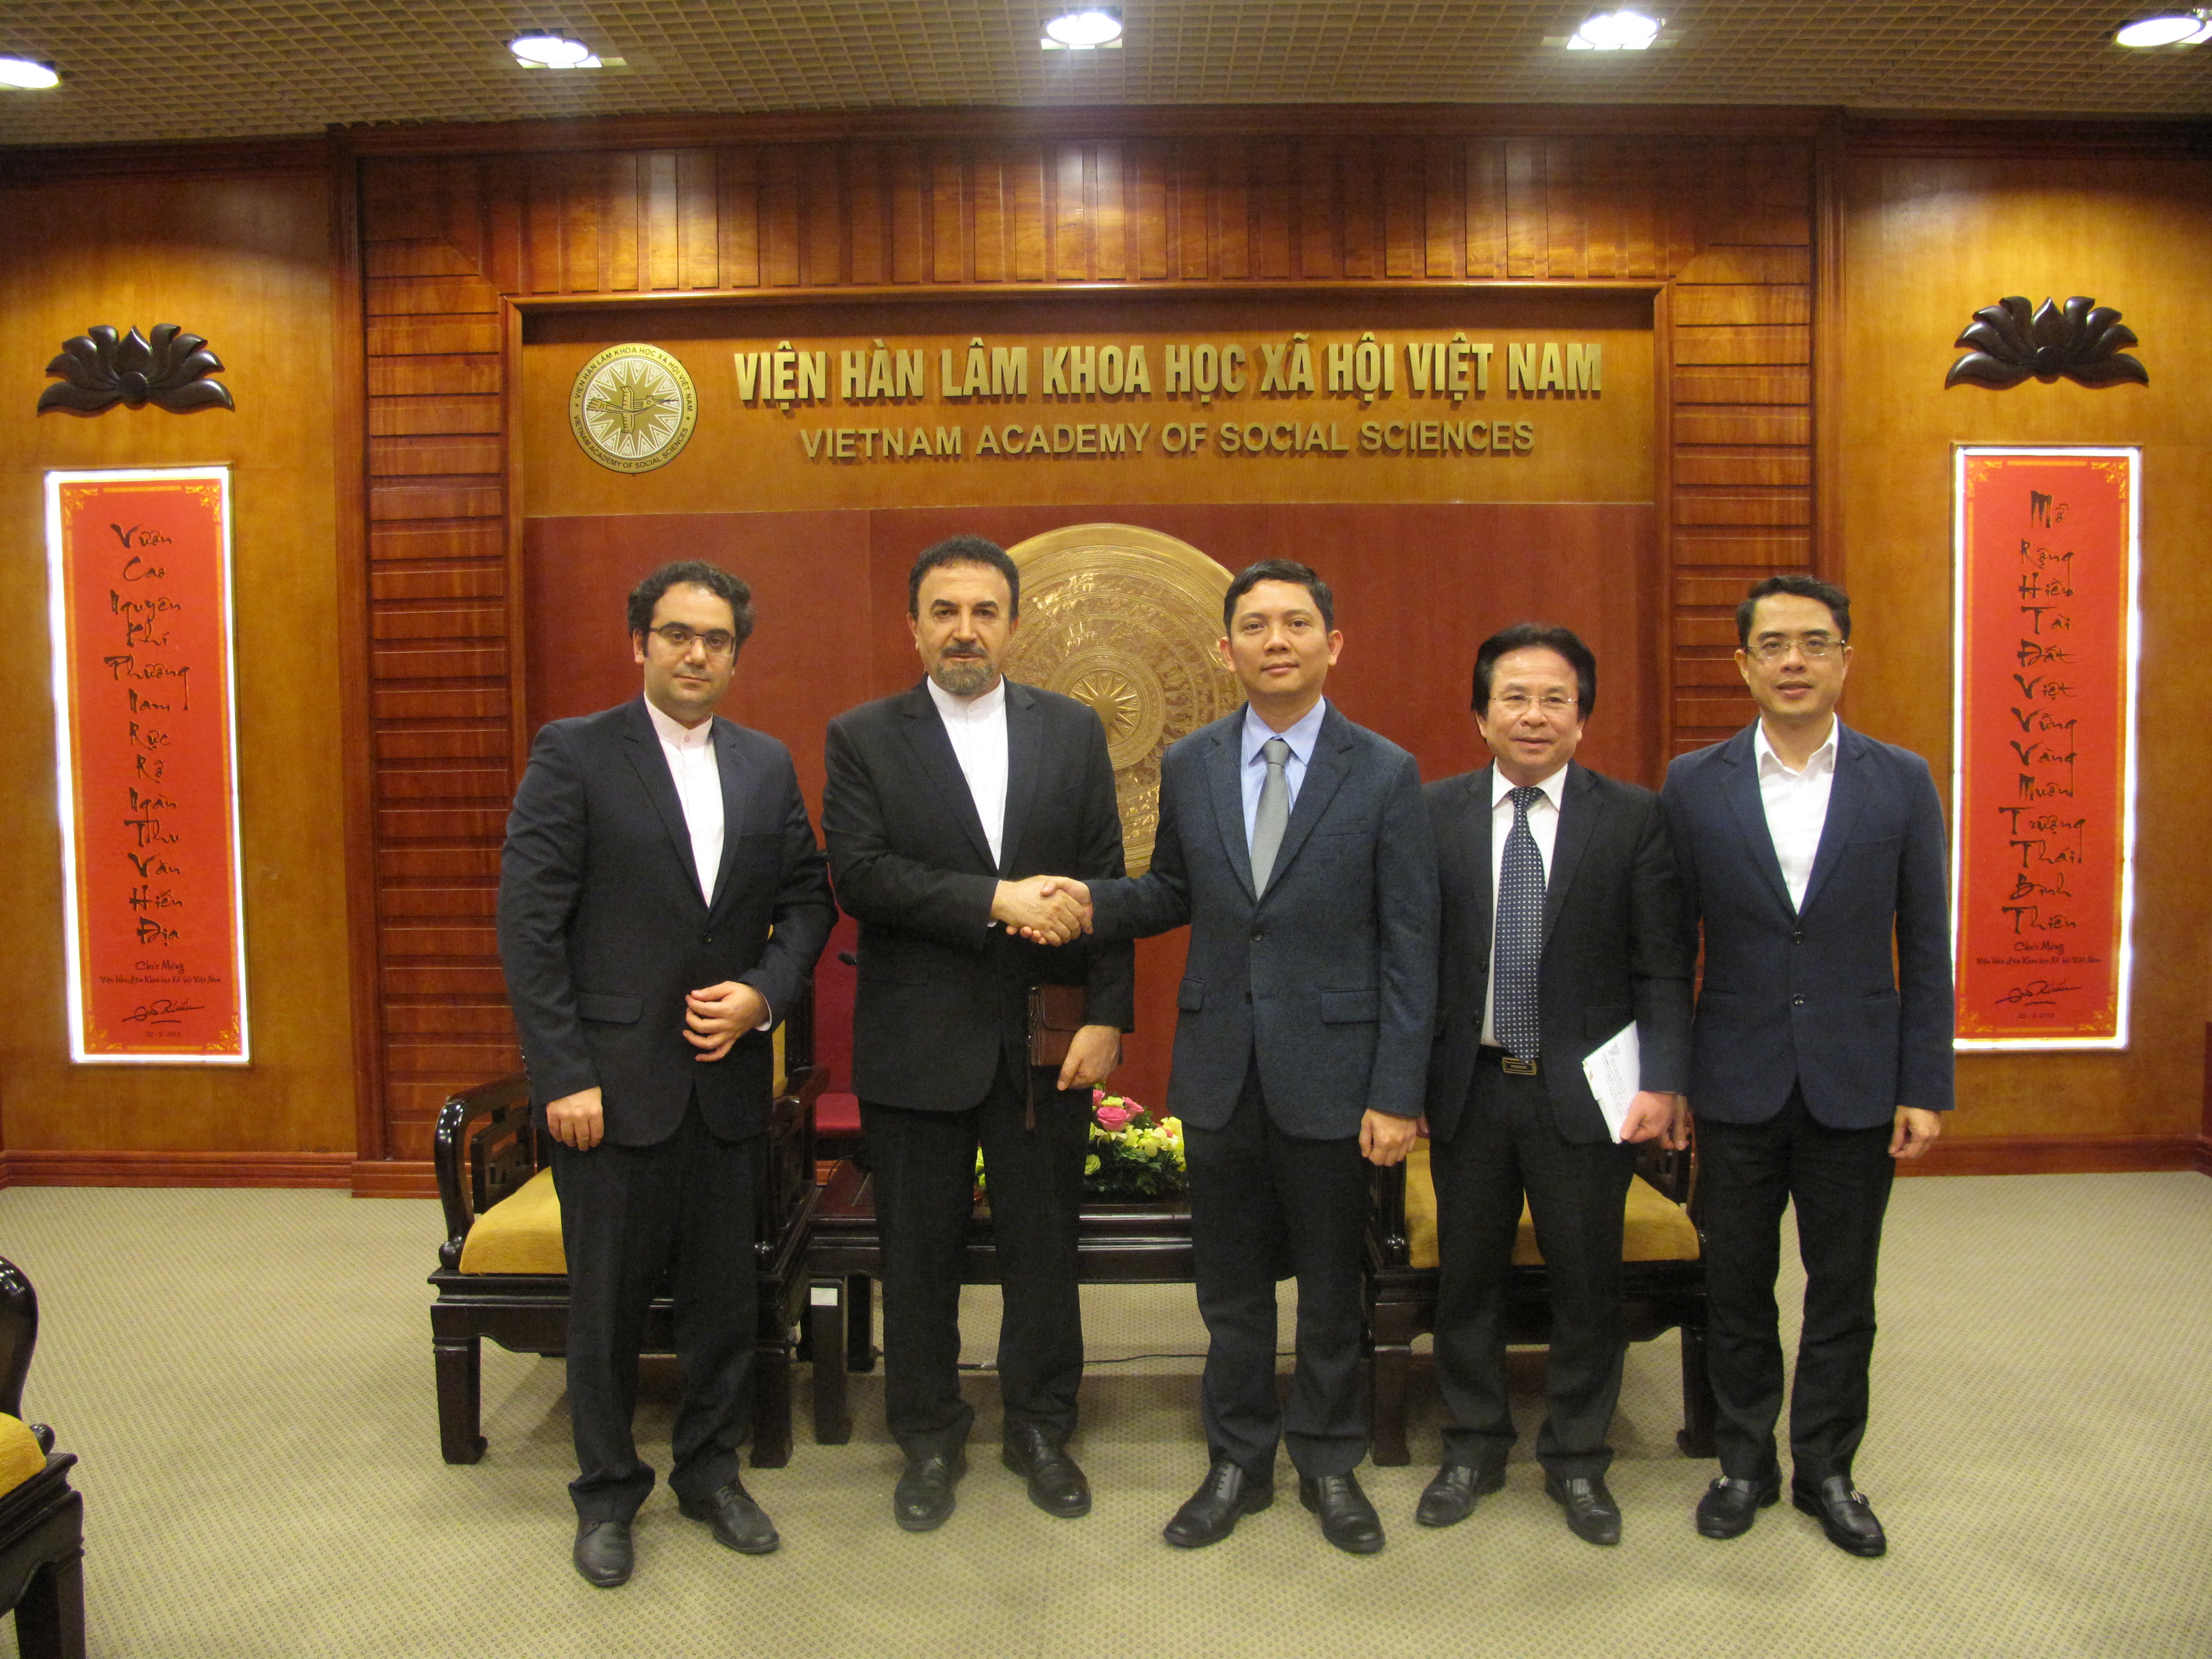 President Bui Nhat Quang took photo with Ambassador Saleh Adibi and the delegates at the meeting